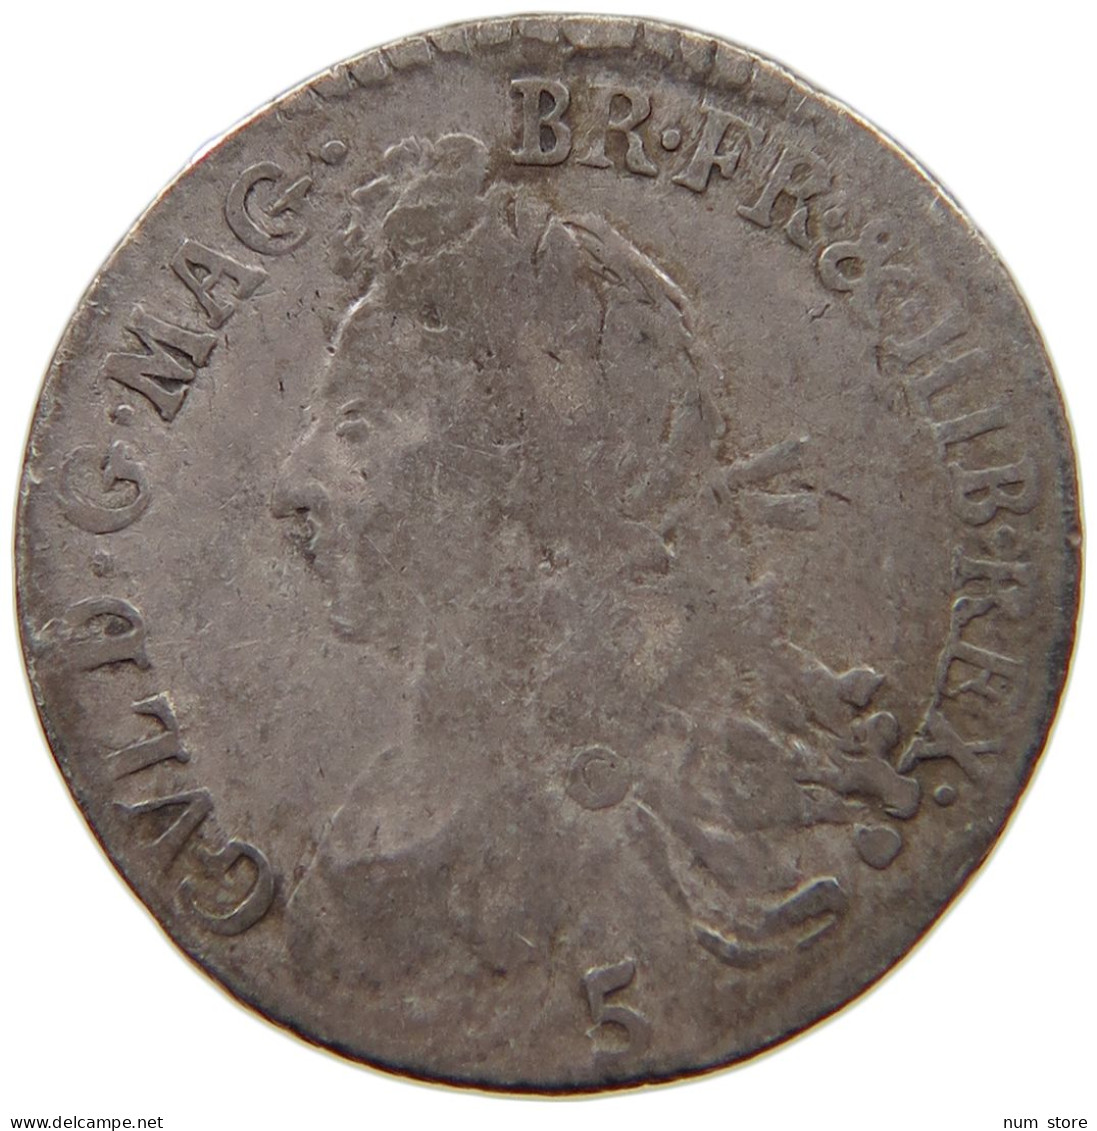 SCOTLAND SHILLING 1695 WILLIAM II. (1694-1702) #MA 009589 - Scottish